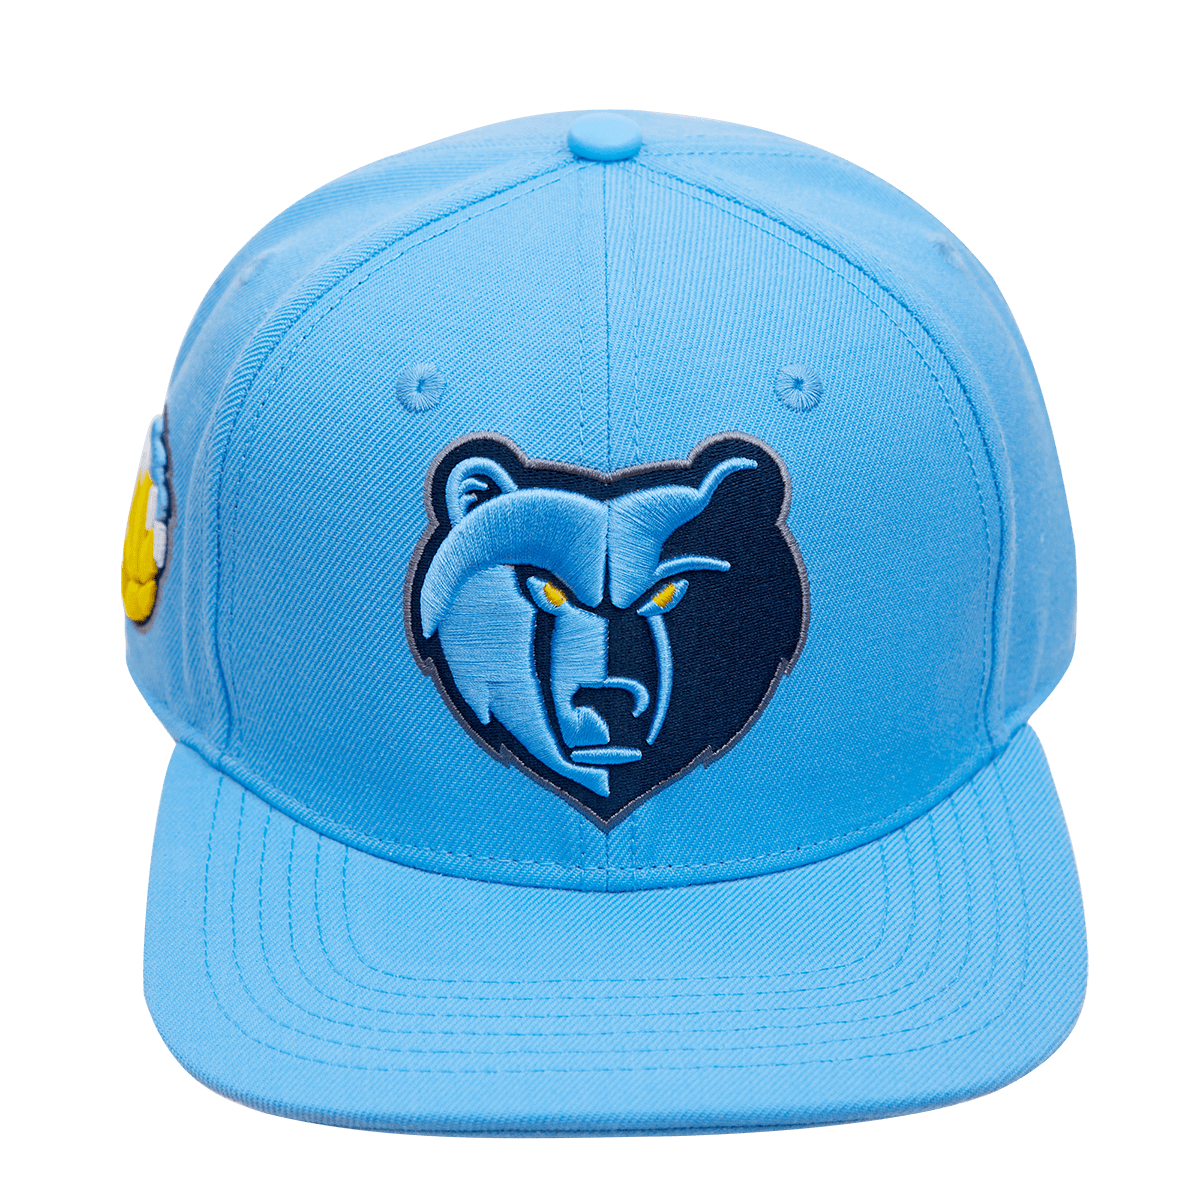 Memphis Grizzlies Hats, Grizzlies Snapback, Grizzlies Caps